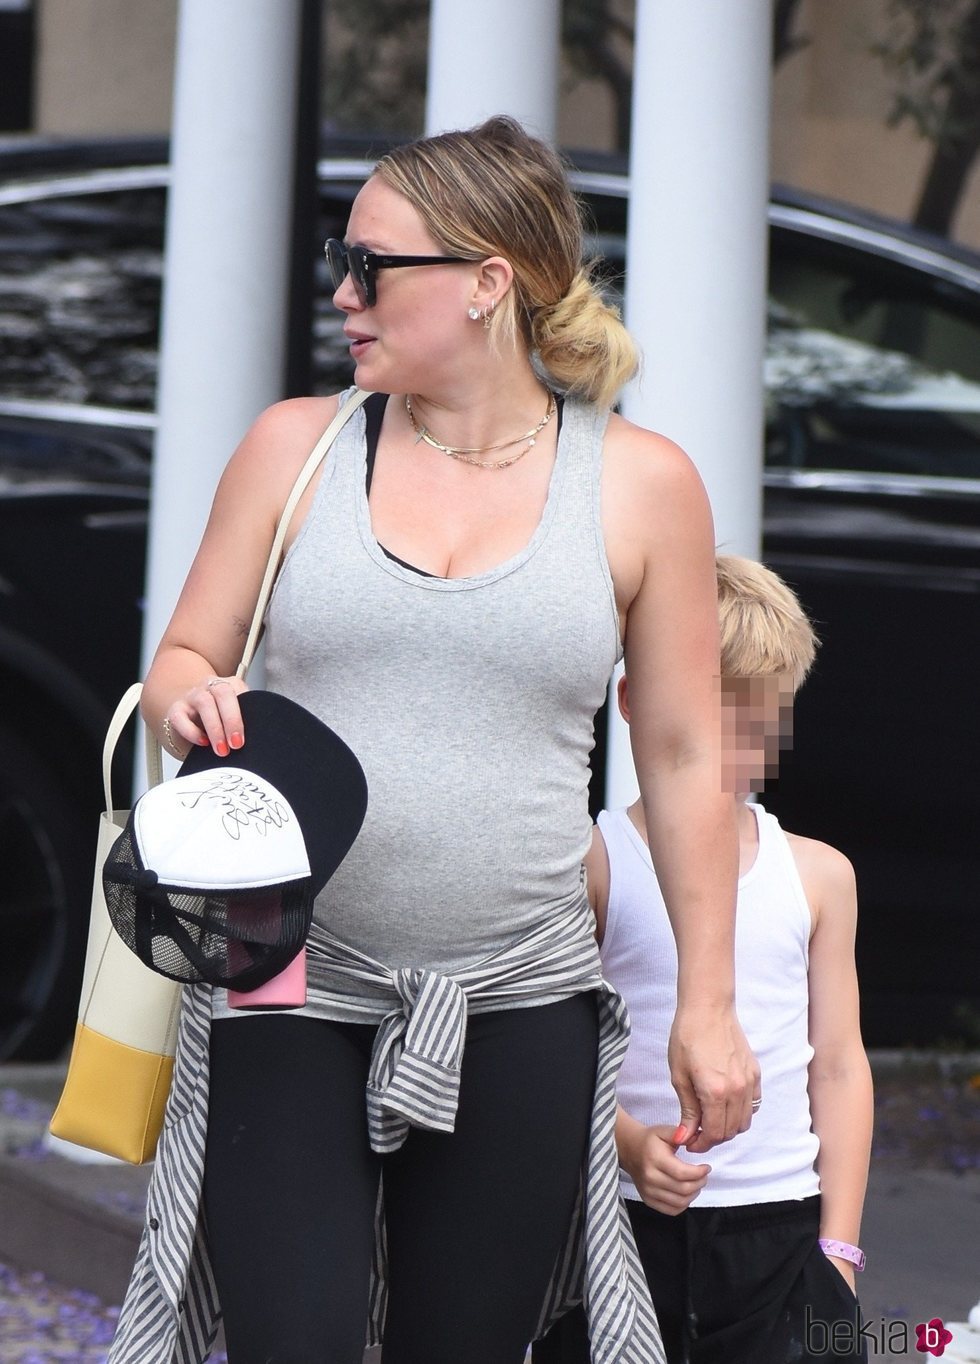 Hilary Duff muestra su segundo embarazo